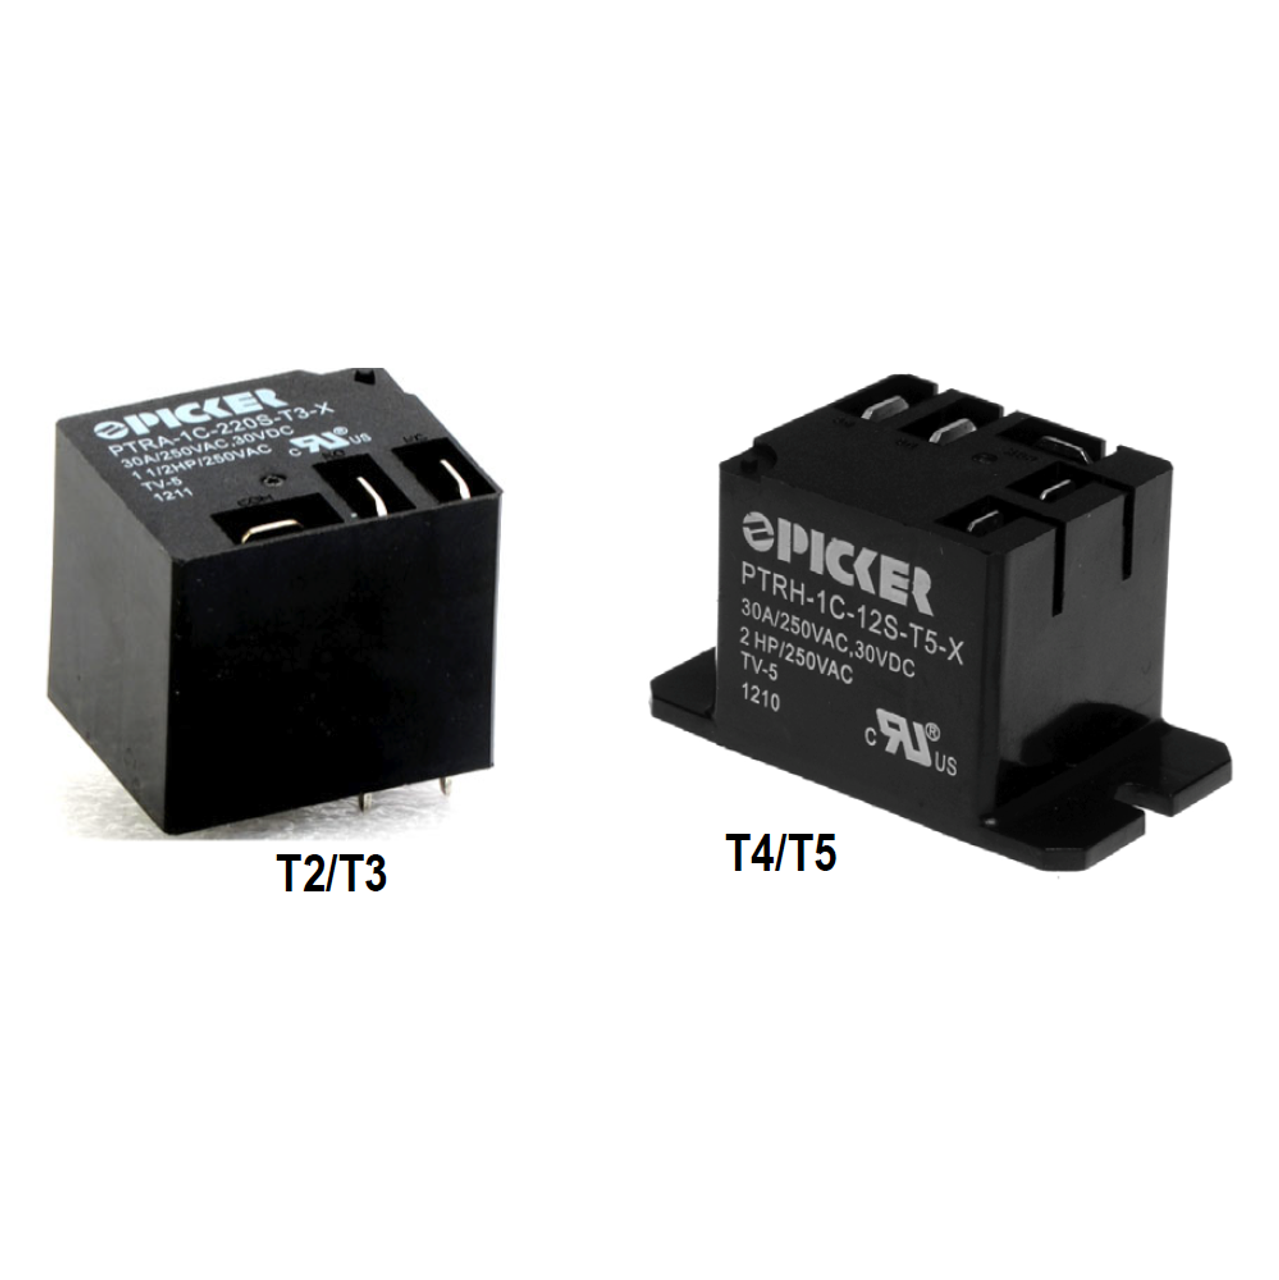 Picker PTRH-1C-110CT-T2-X-0.6G Power Relays